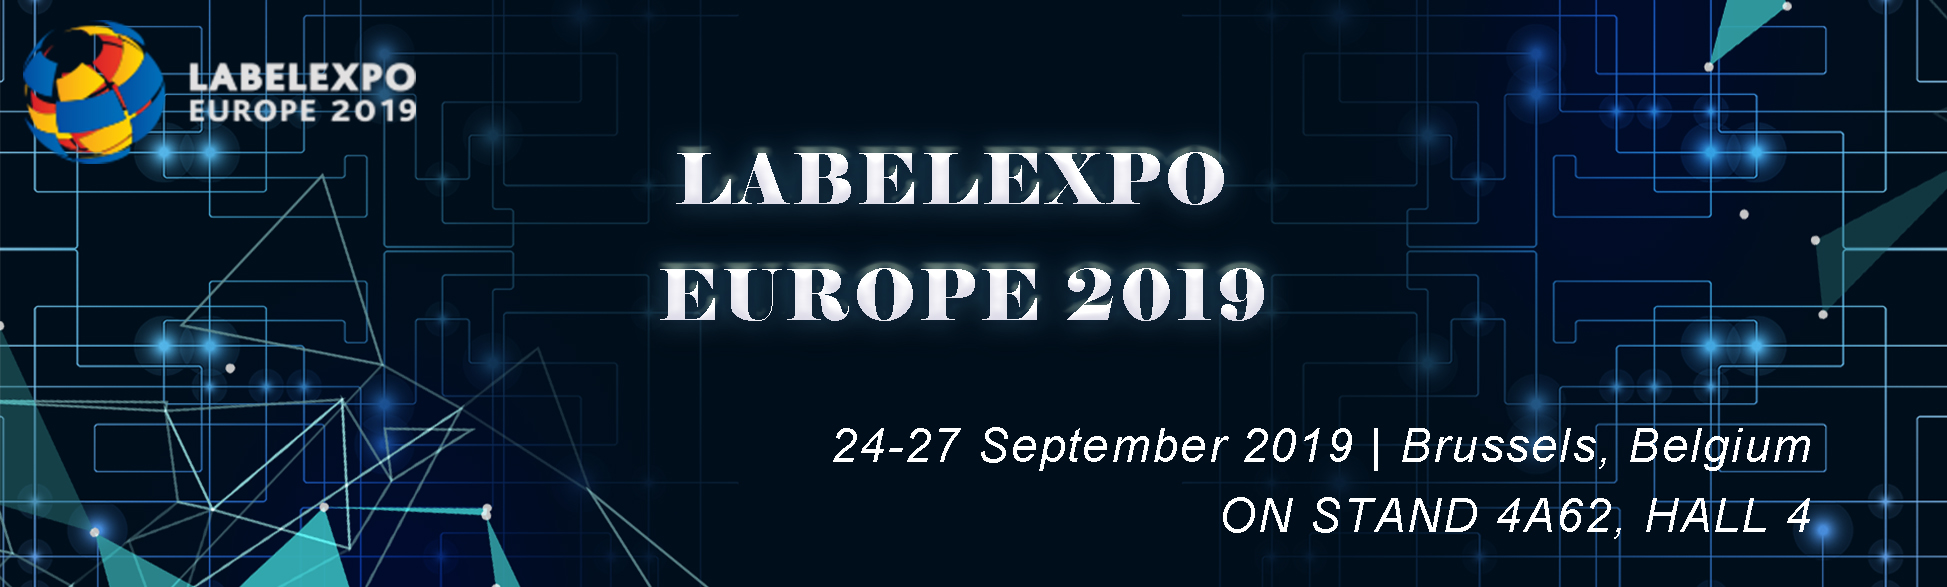 LABELEXPO EUROPE 2019.jpg